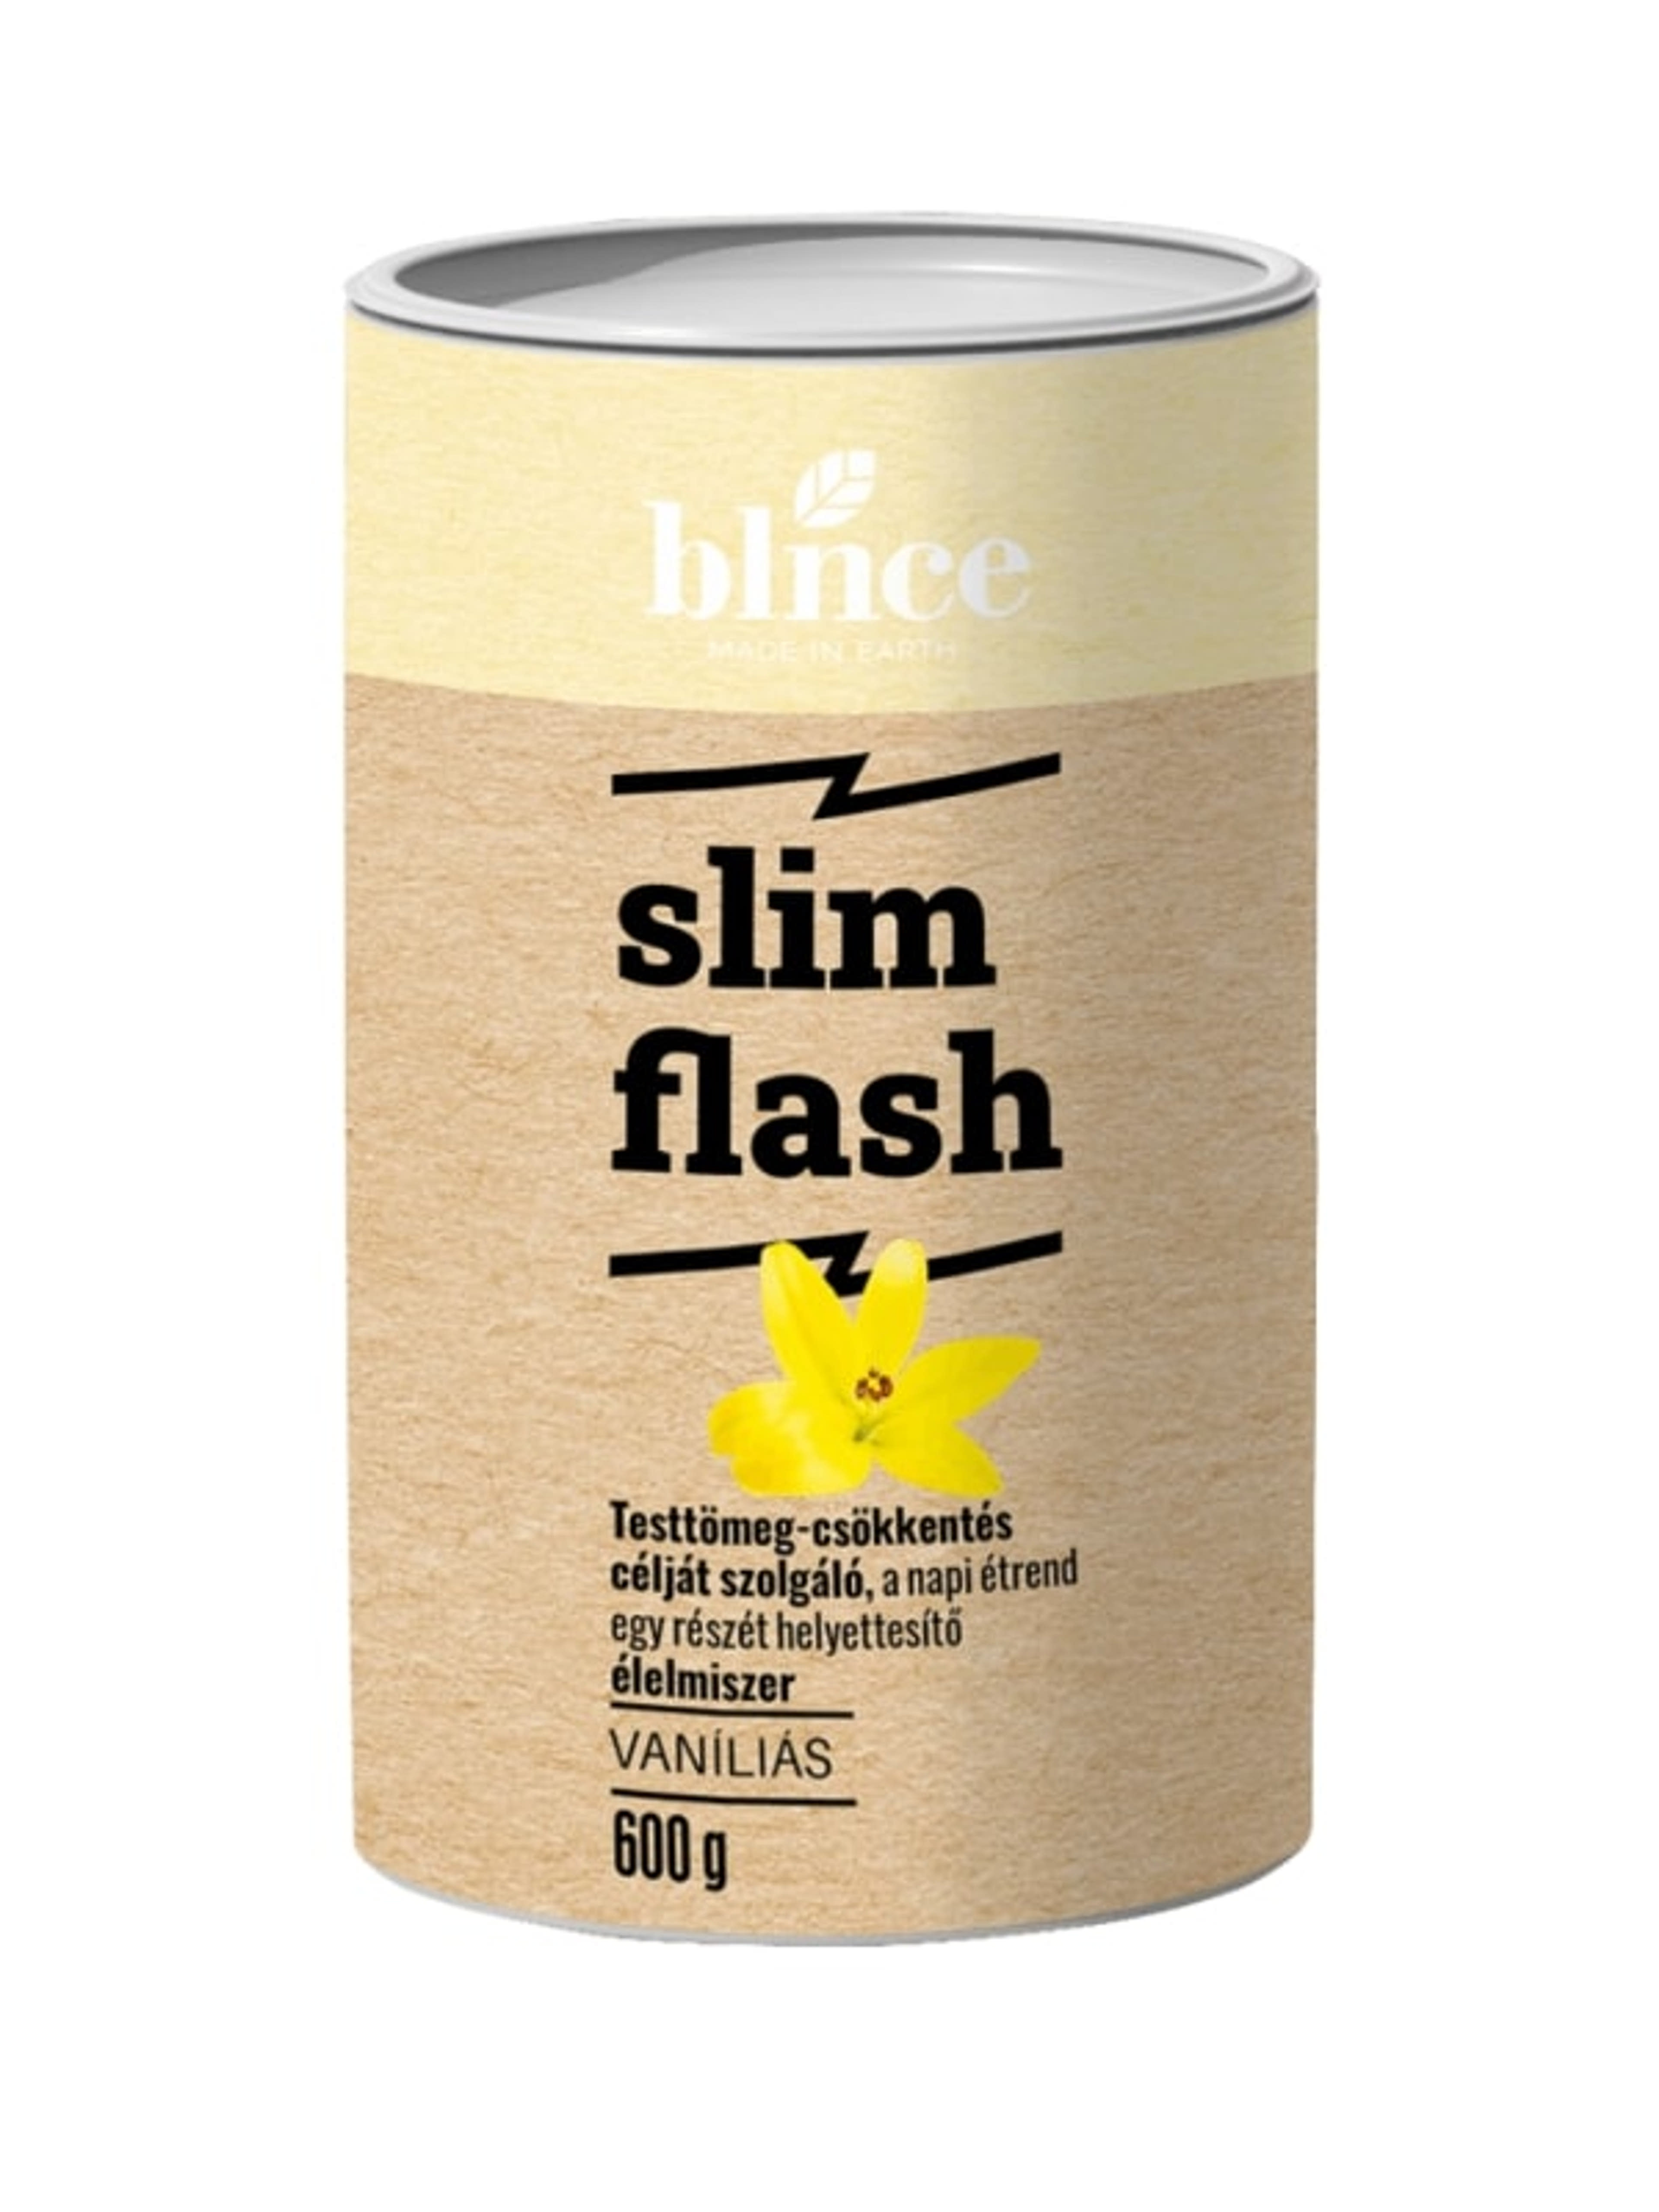 Blnce Active Slim Flash fogyókúrás italpor, vaníliás - 600 g-1